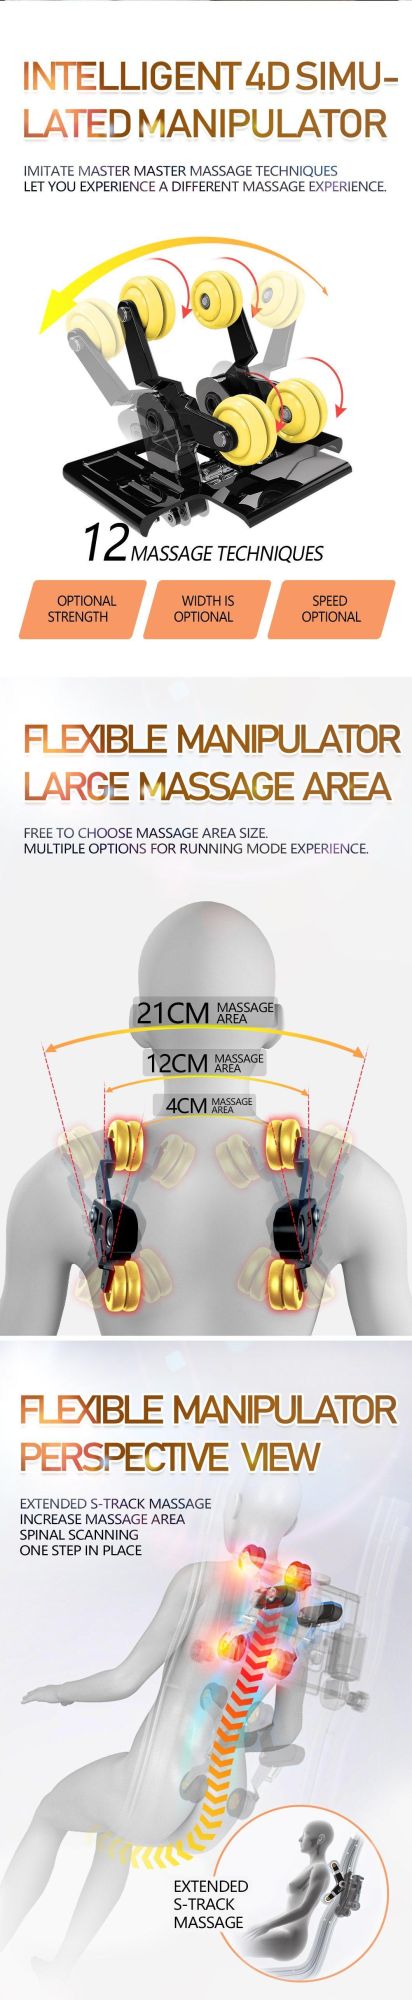 Bluetooth Music Multifunction 3D Zero Gravity Full Body Recliner Shiatsu Relax Massage Chair